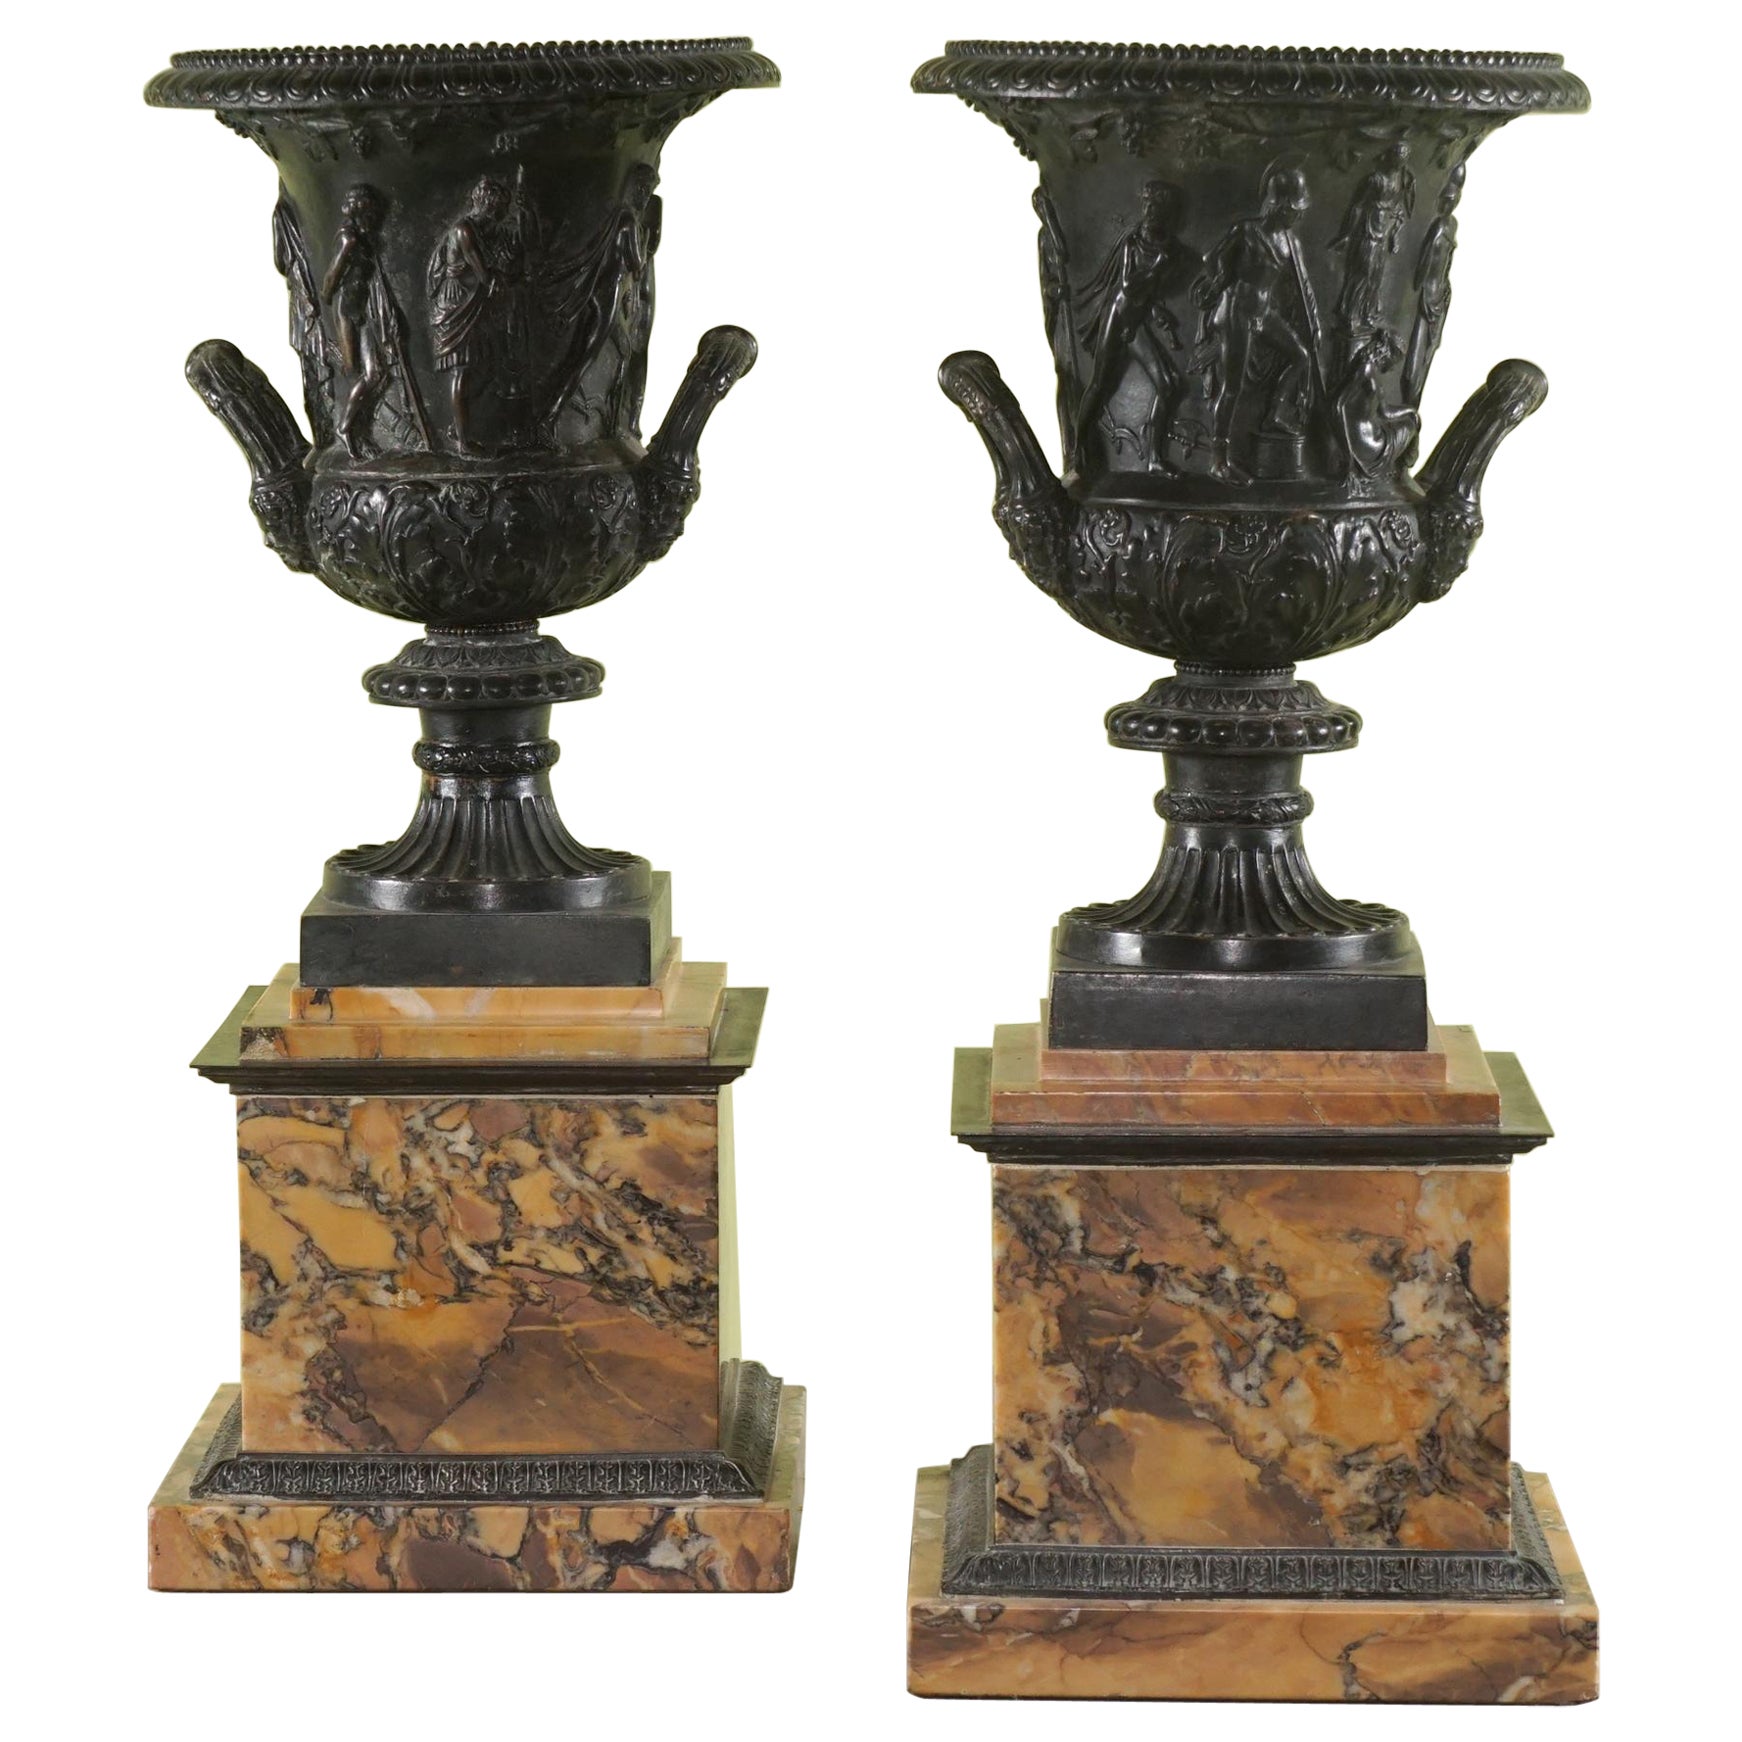 Großes Paar Italain- Medici-Urnen aus dem 19. Jahrhundert auf Sockeln aus Siena-Marmor